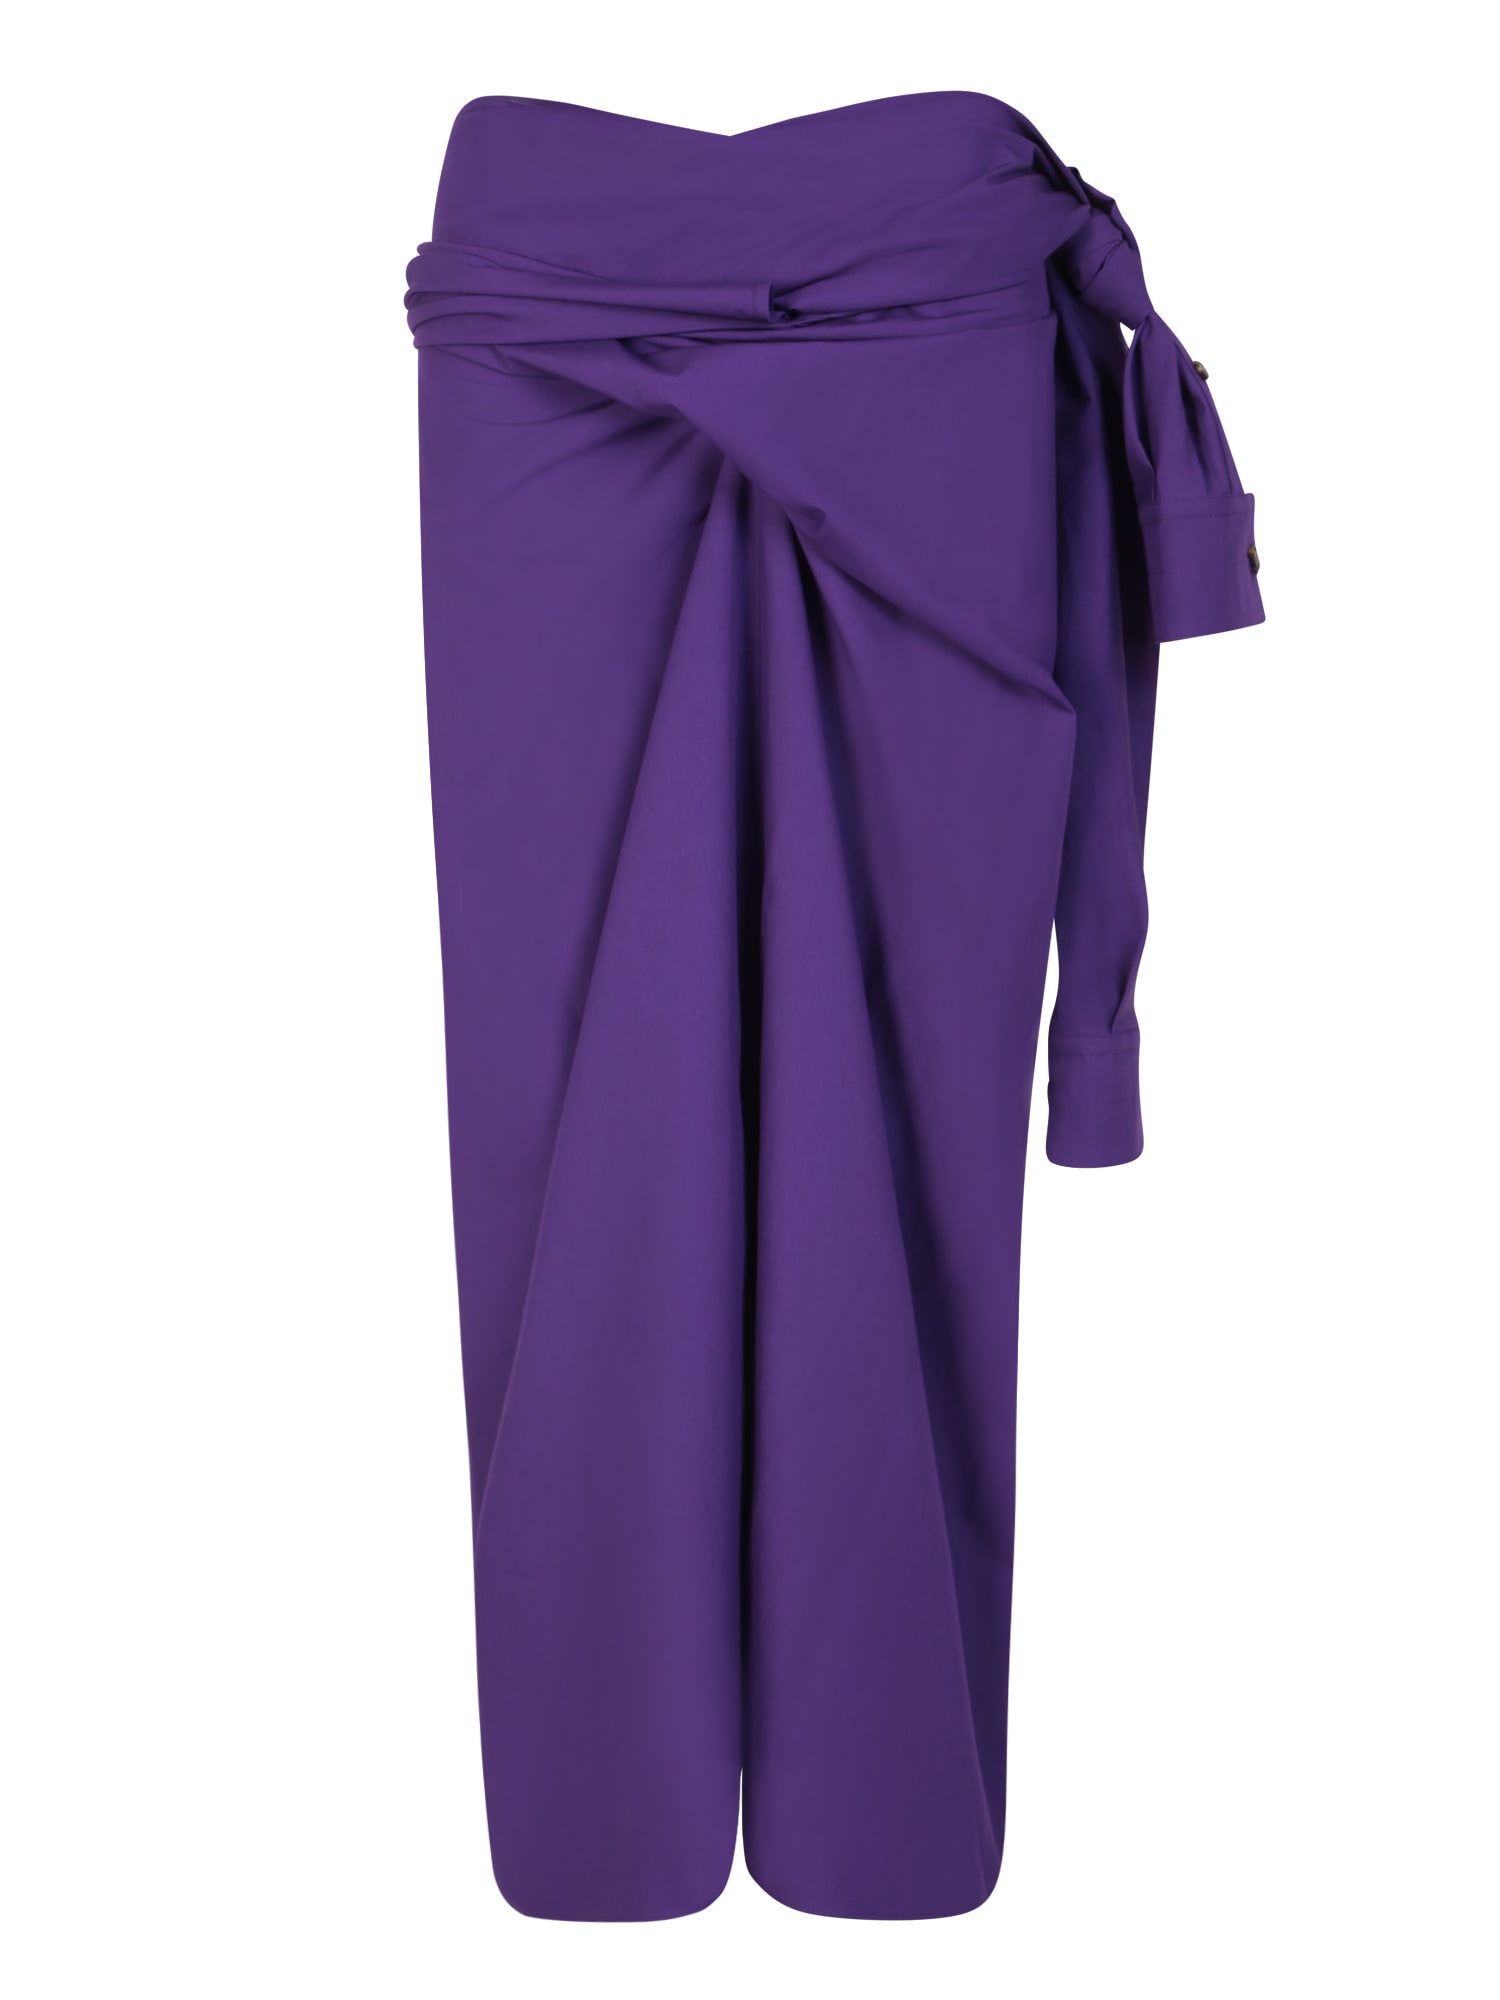 Shop Quira Wrapped Design Purple Skirt